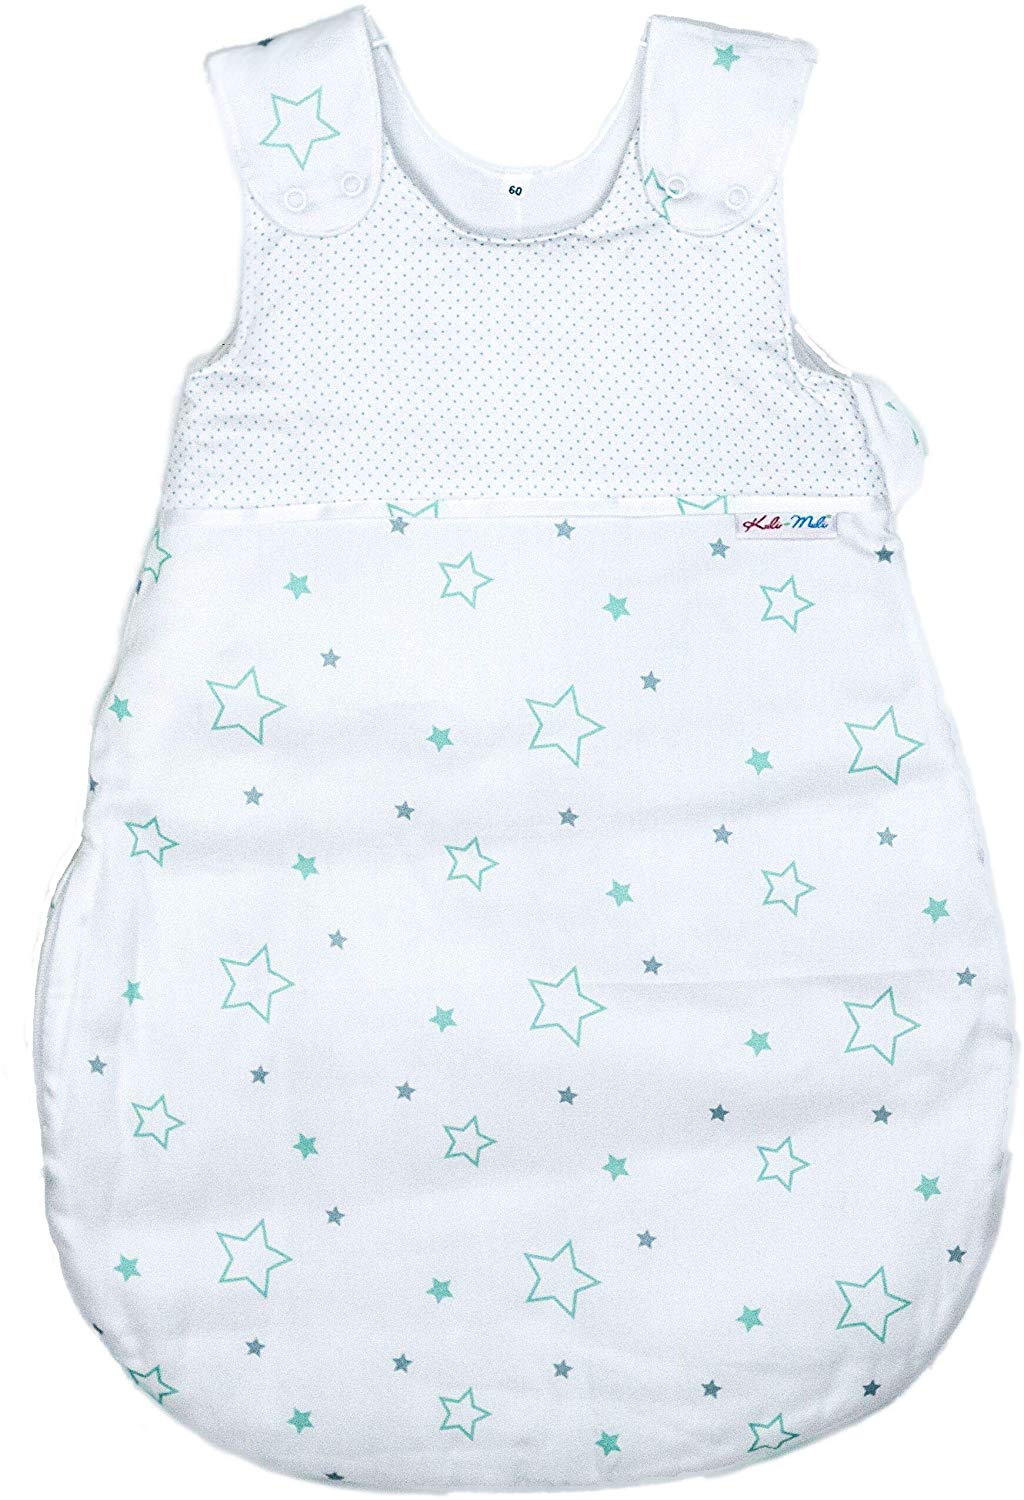 Kuli-Muli Lyocell 18690 Sleeping Bag 110 cm Stars White